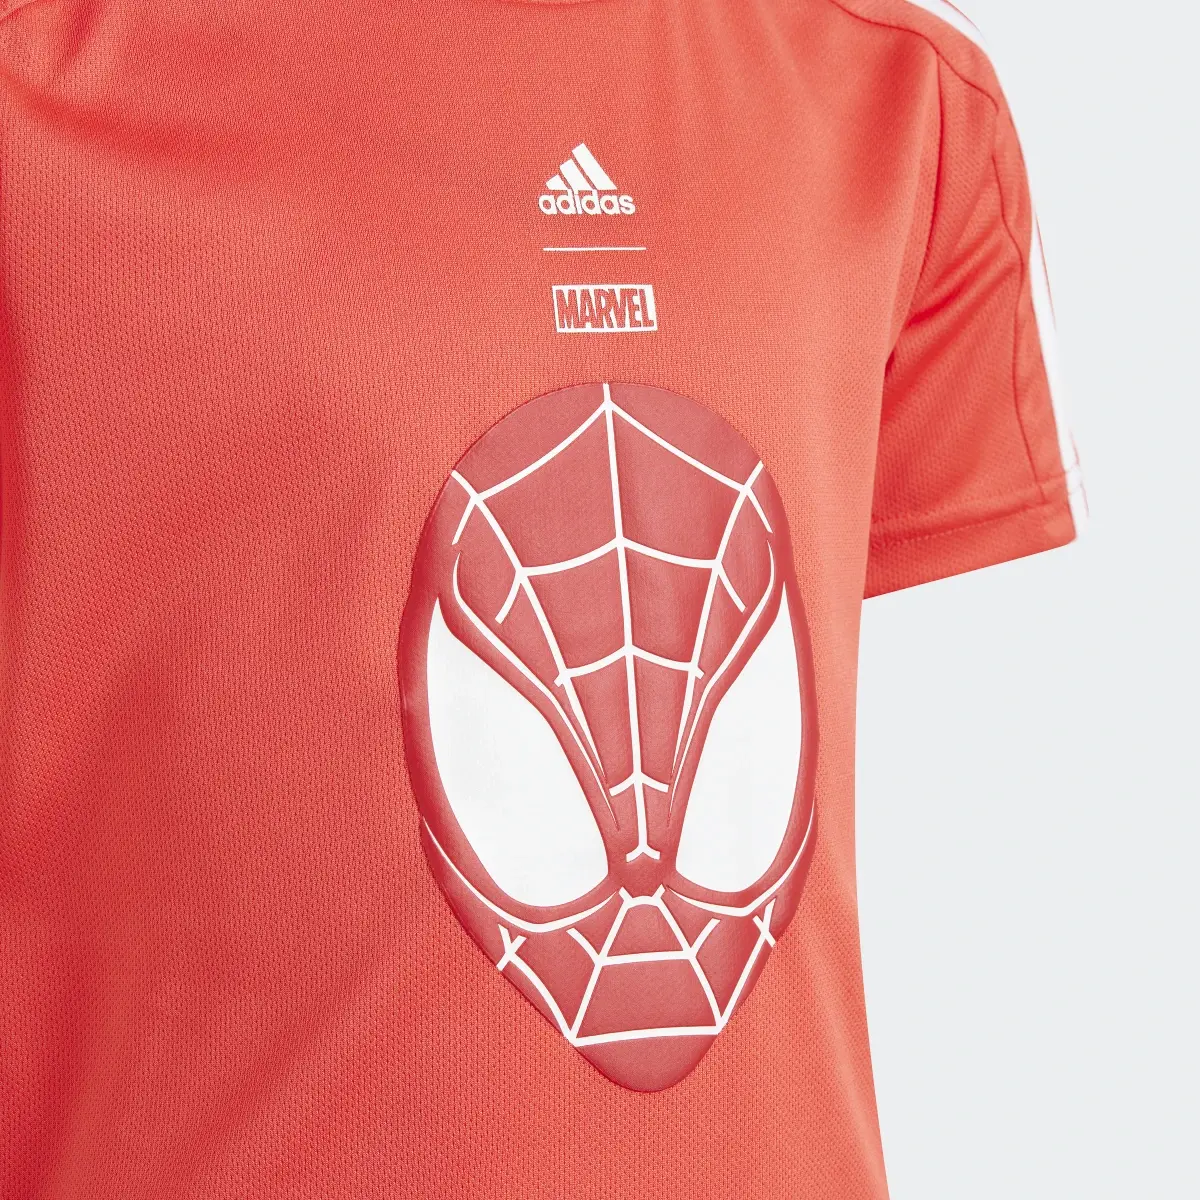 Adidas Playera adidas x Marvel Hombre Araña. 3